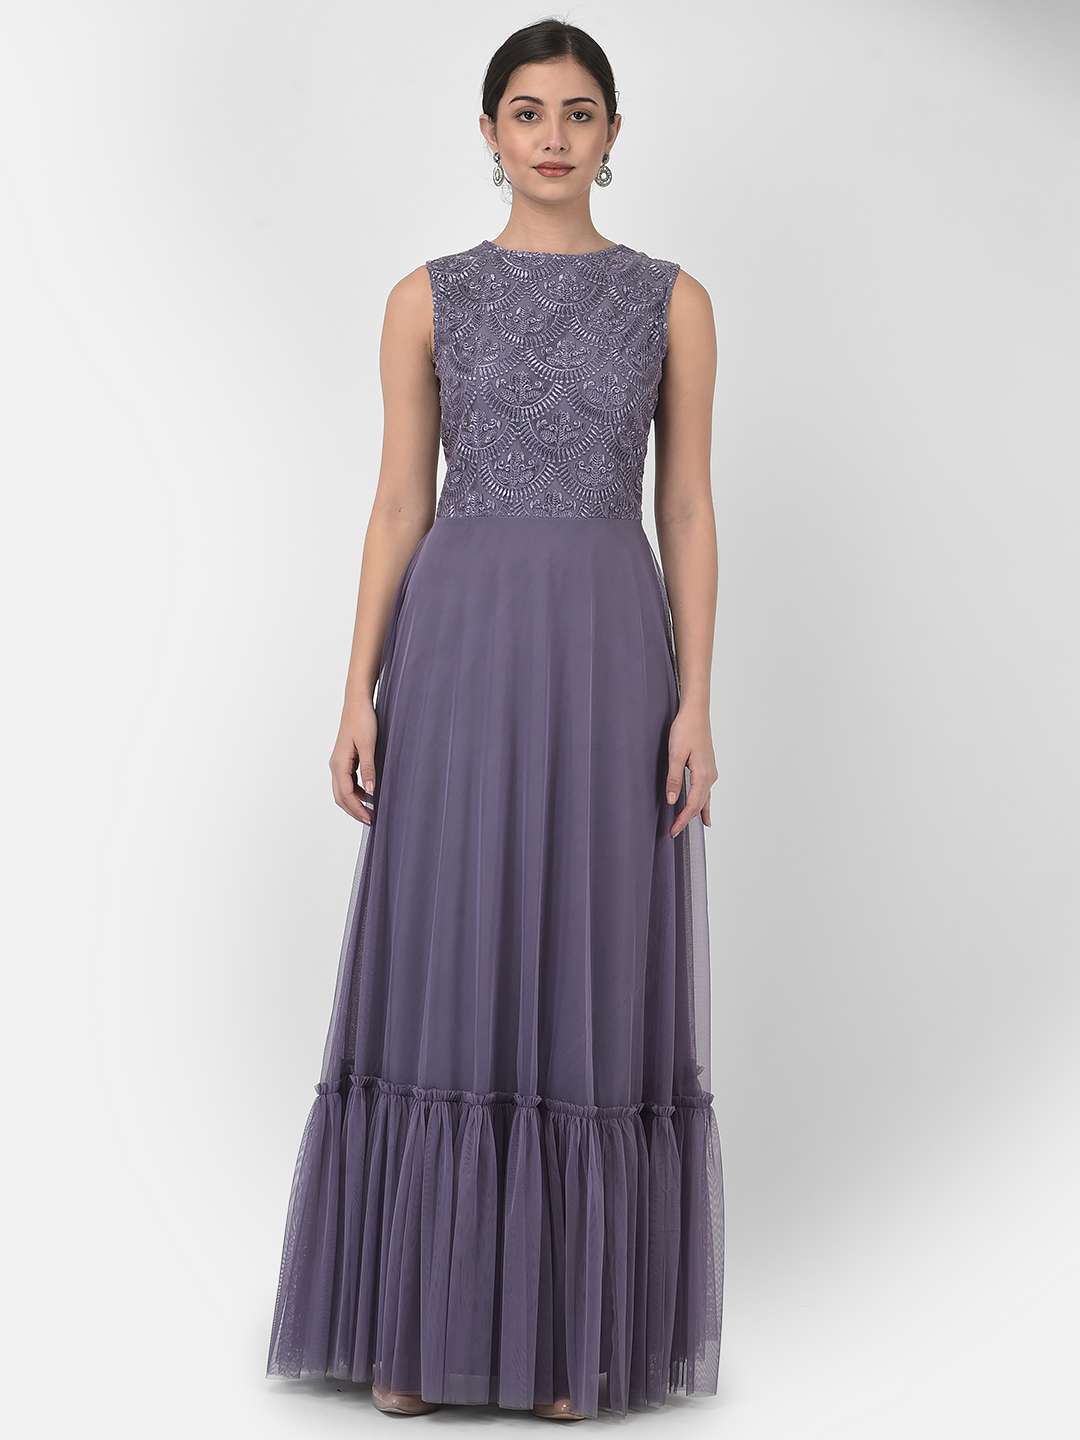 Eavan Lavender Embroidered Maxi Dress